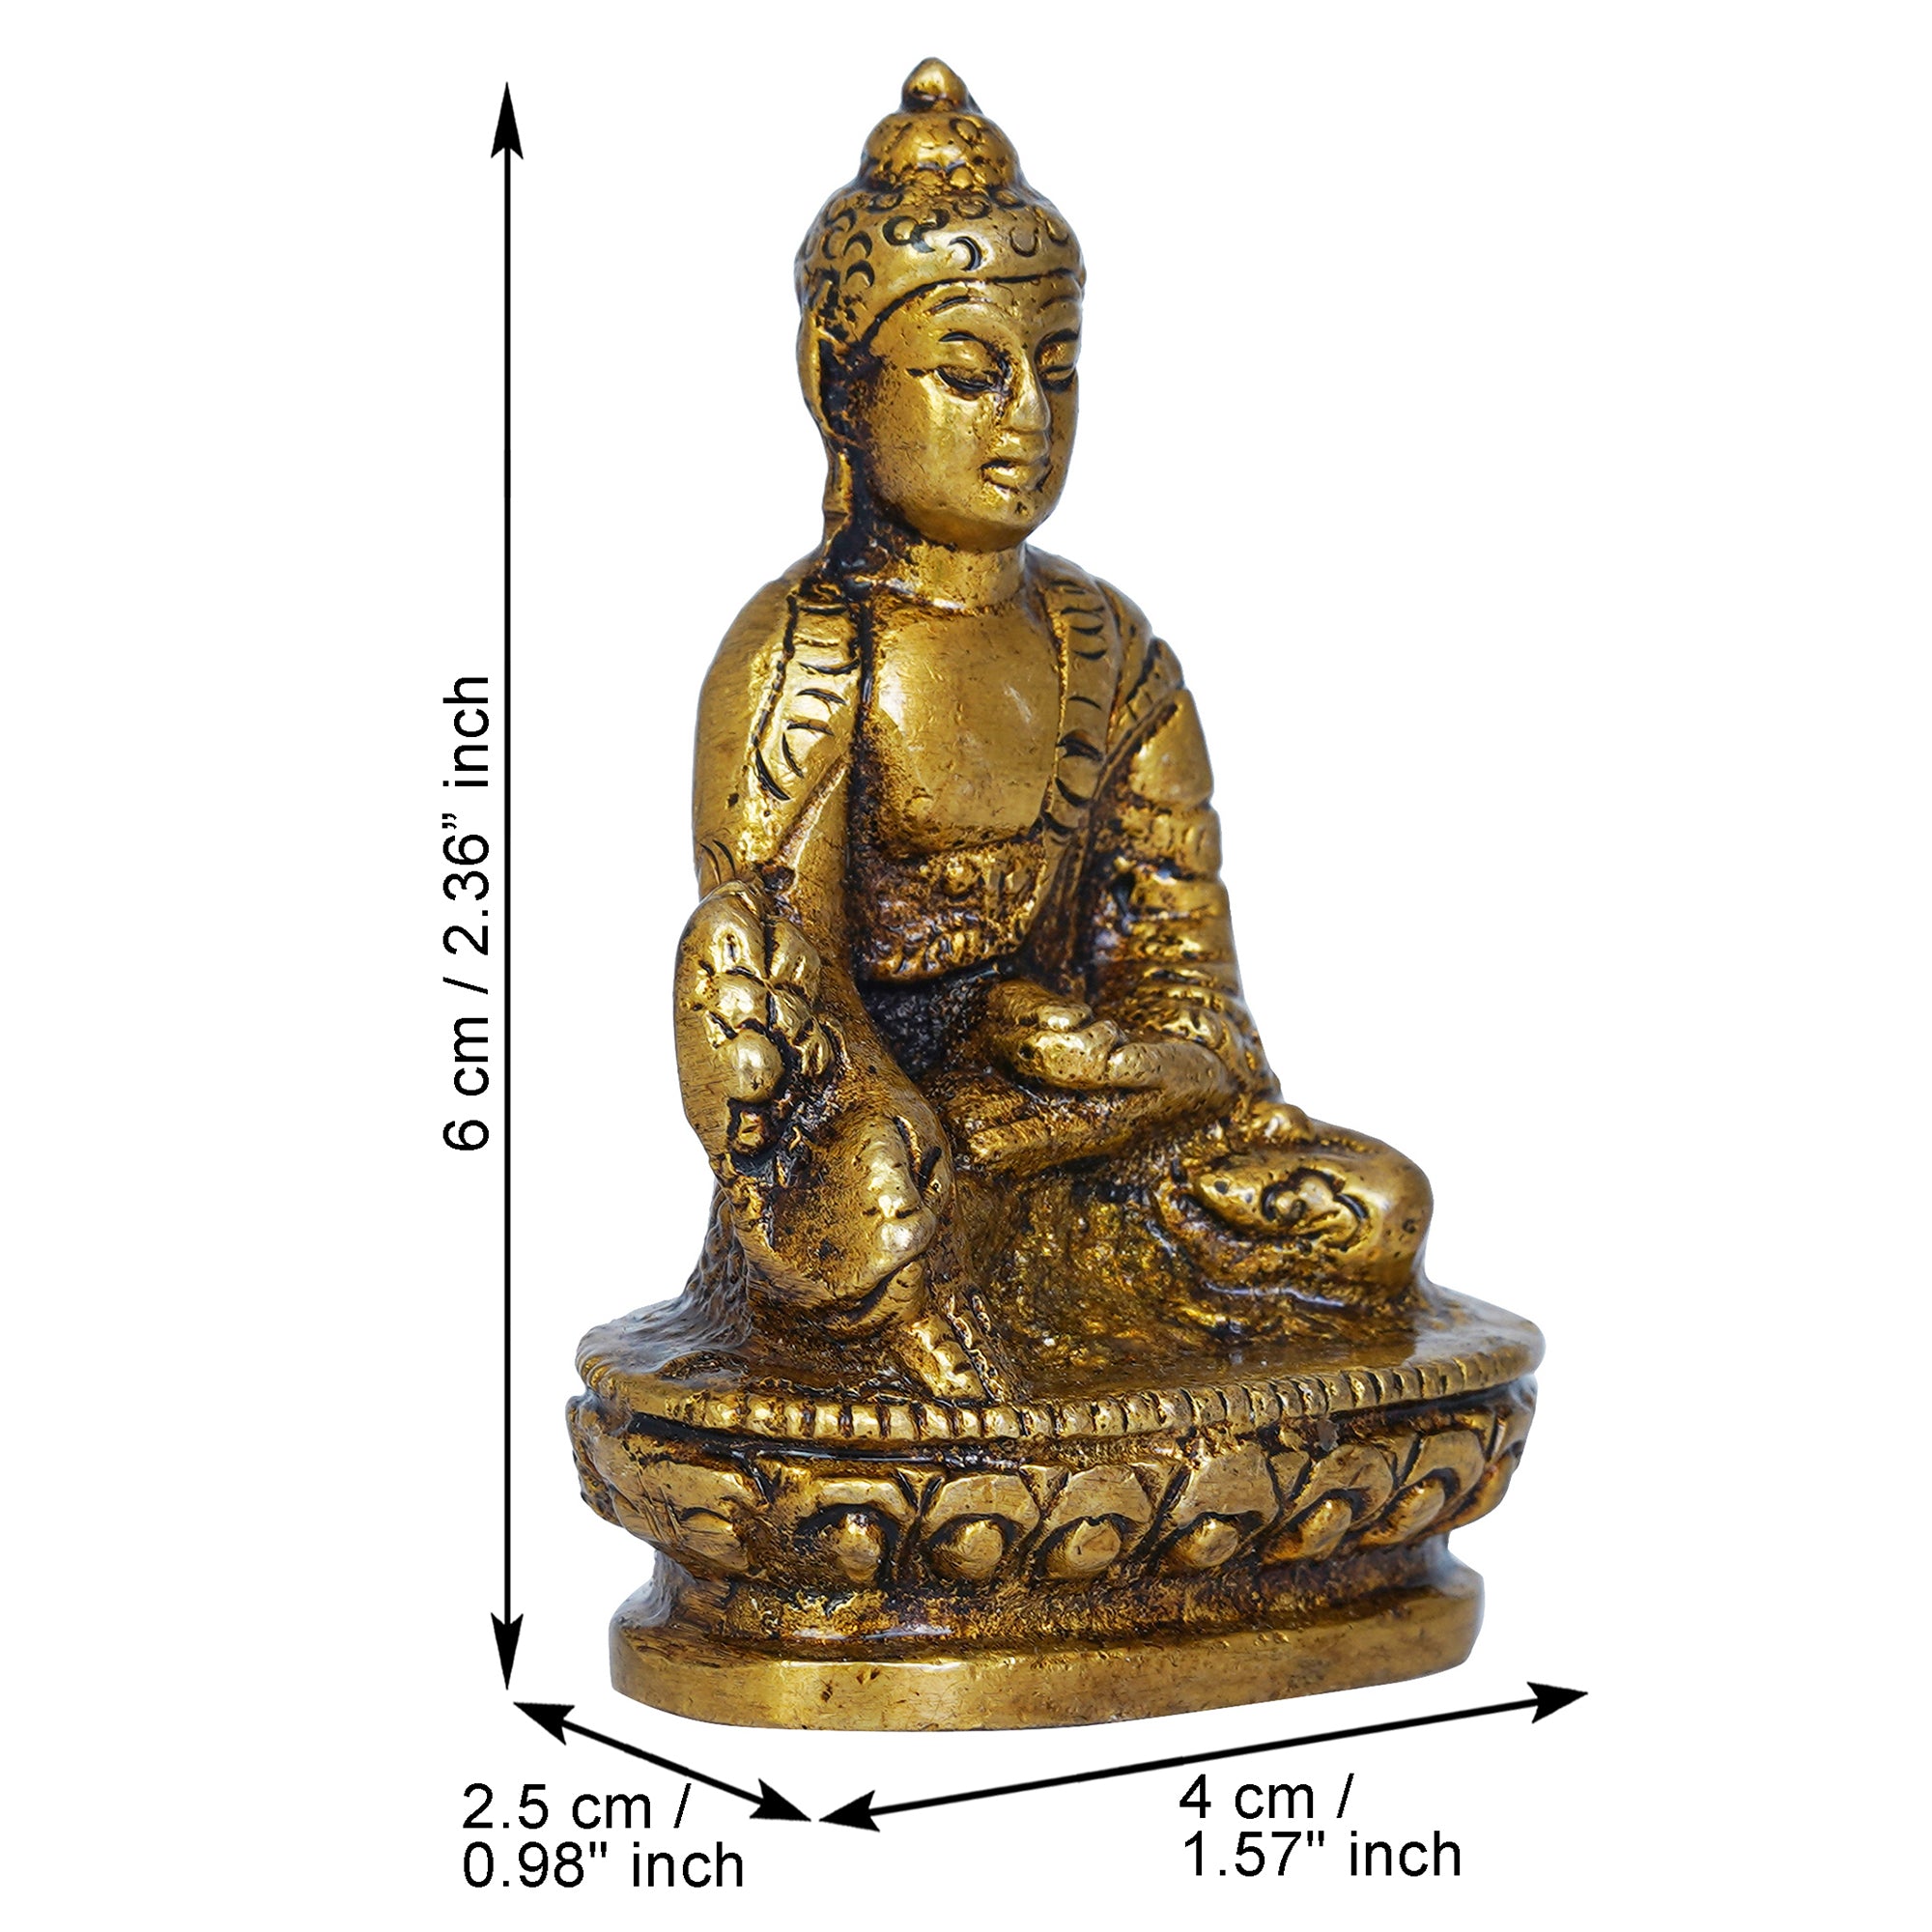 Golden Brass Lord Buddha Statue Murti Idol for Home Decor, Living Room, Office Desk, Car Dashboard - Buddha Purnima Gift to Bring Good Luck 3